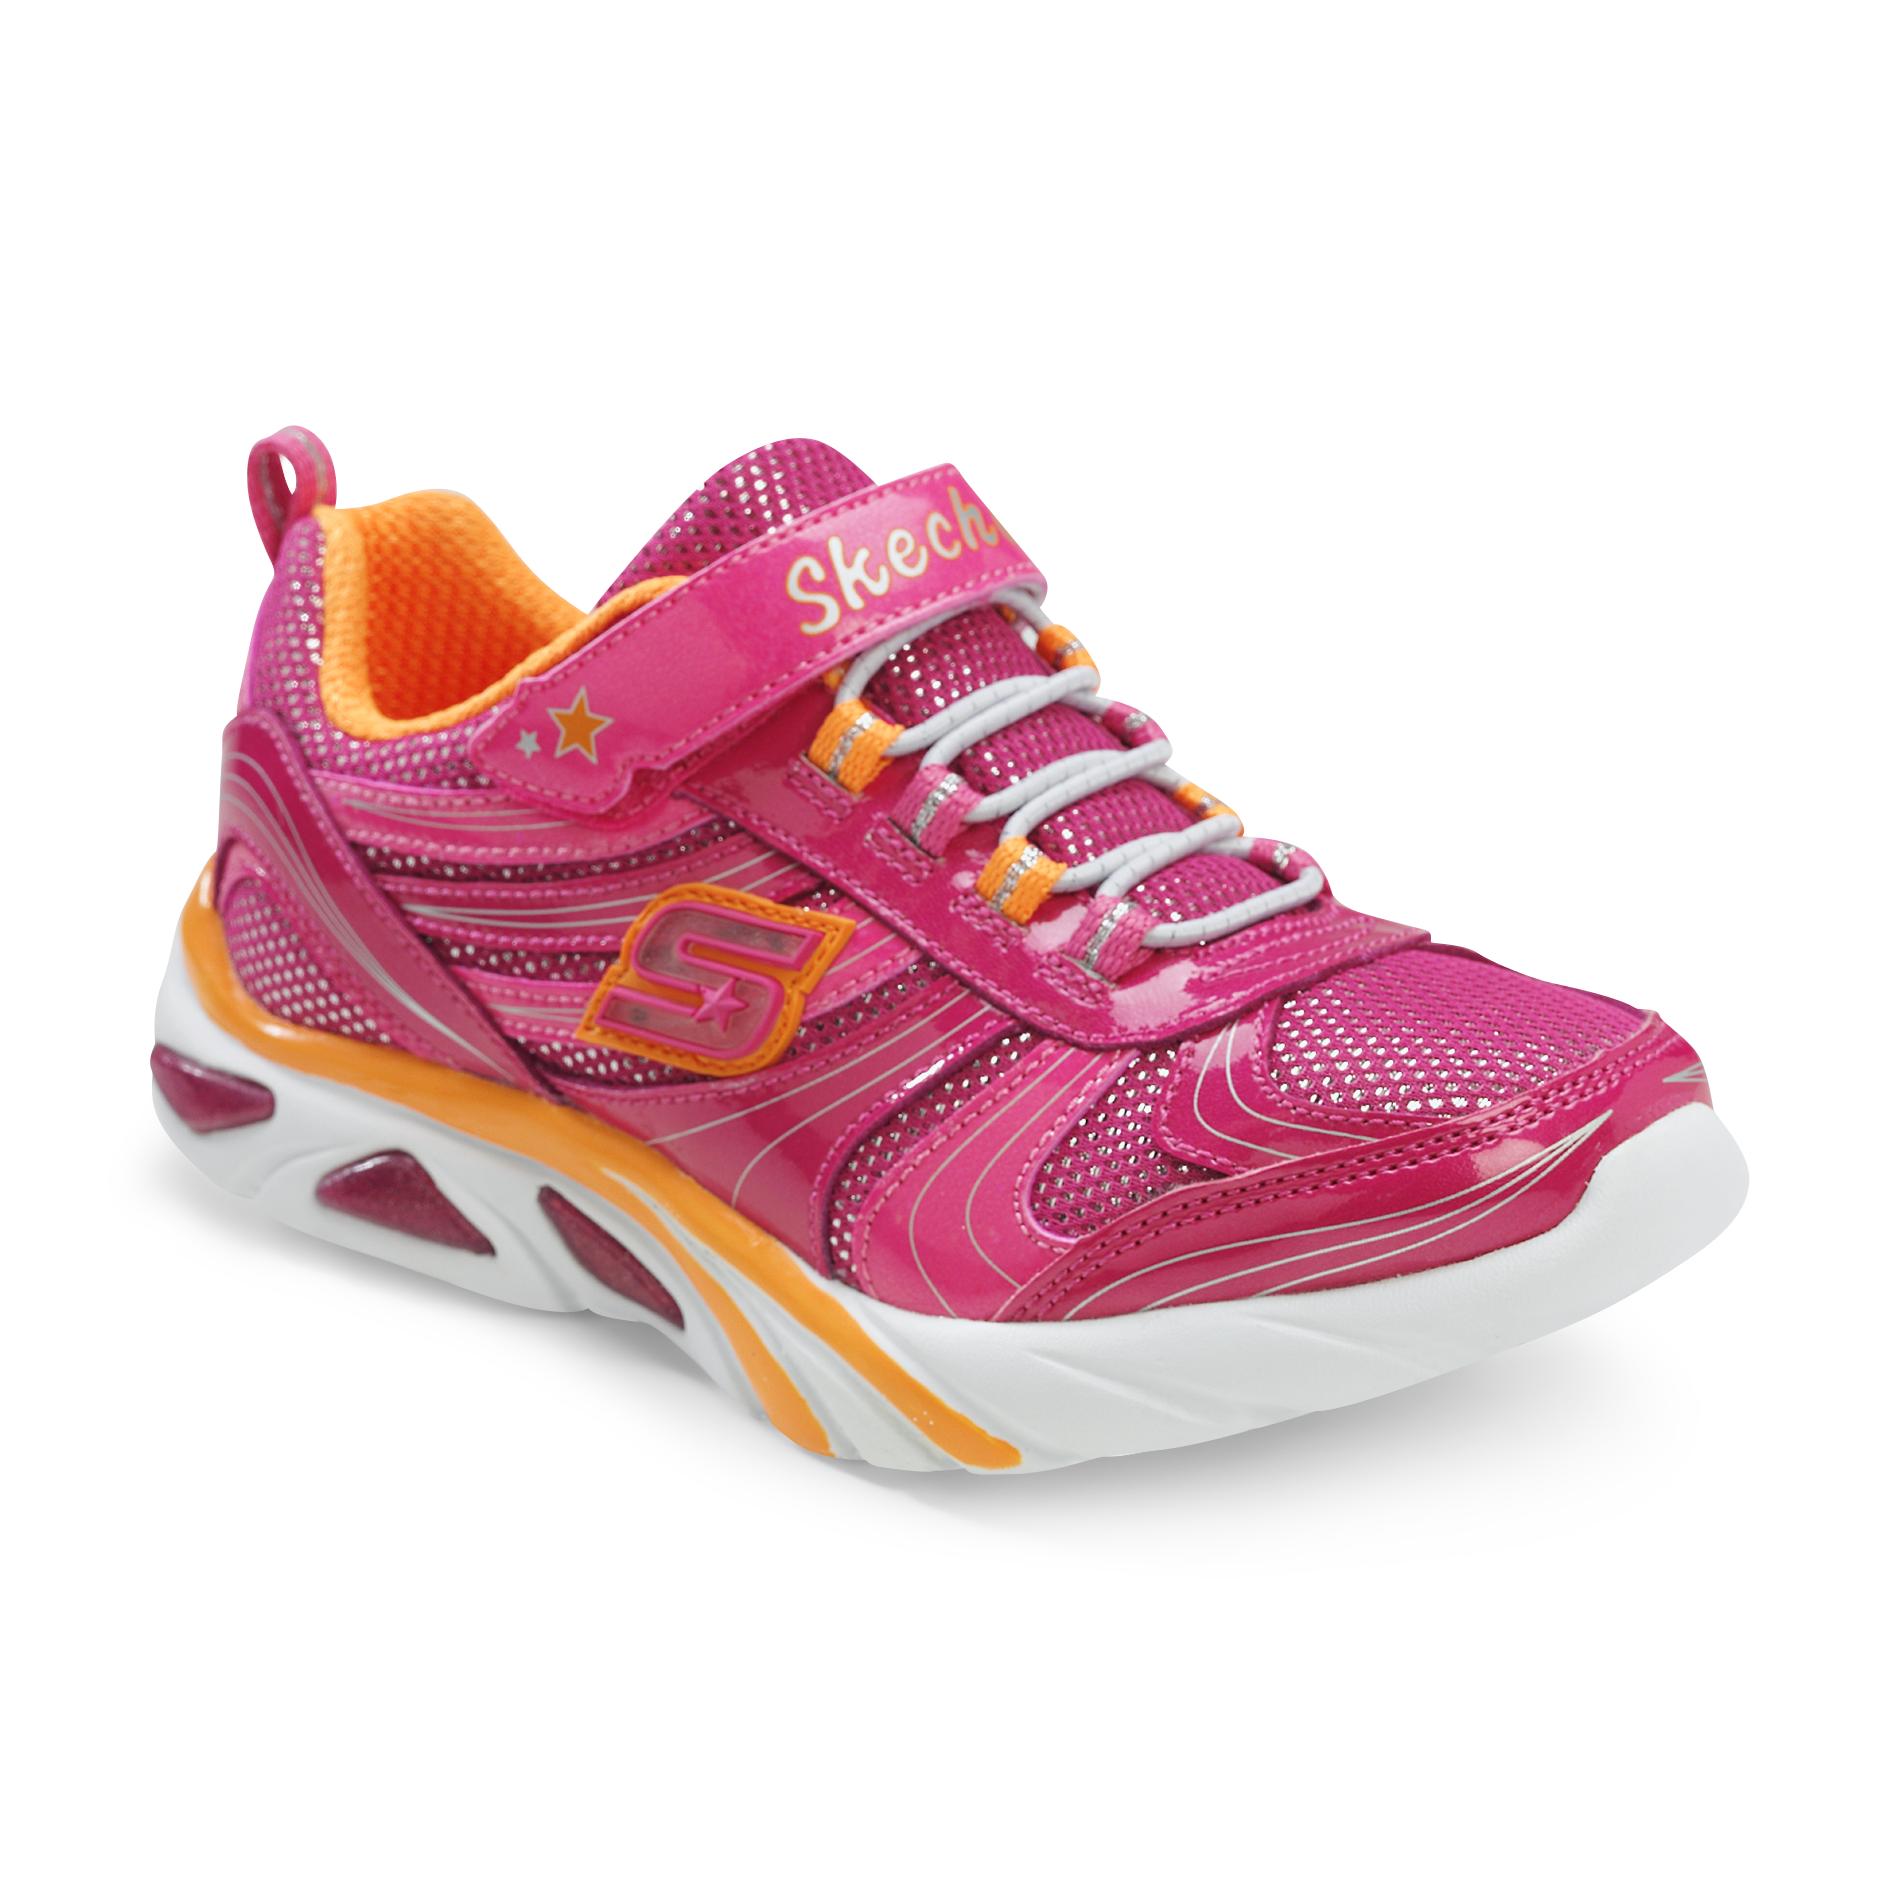 Skechers Girl's Lite Gemz Athletic Shoe - Pink/Orange